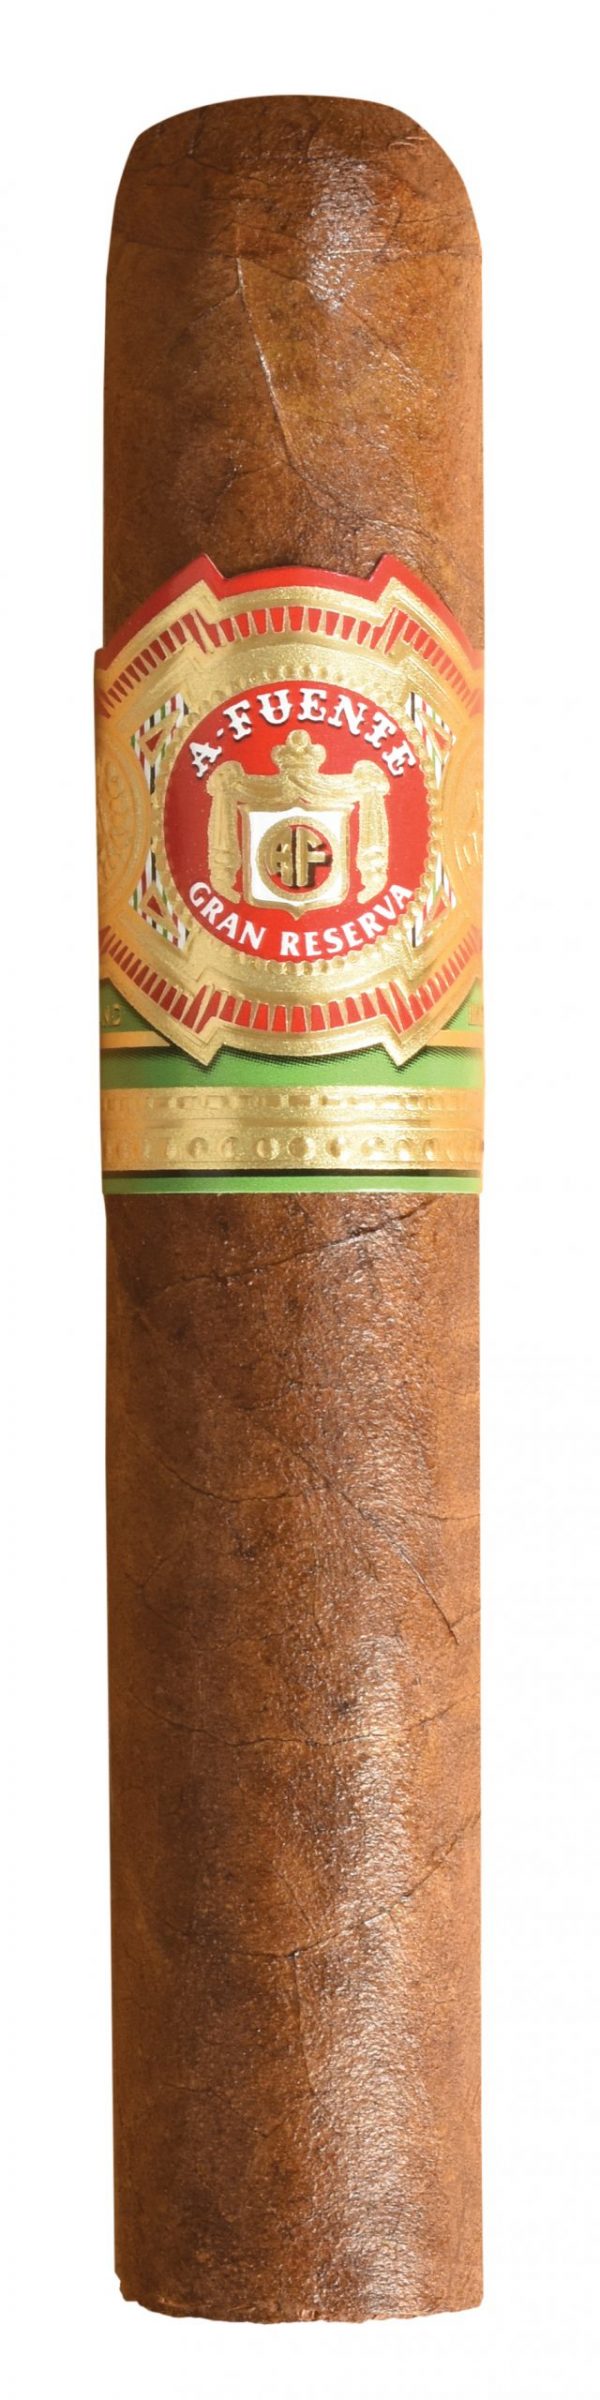 single arturo fuente rothschild natural cigar